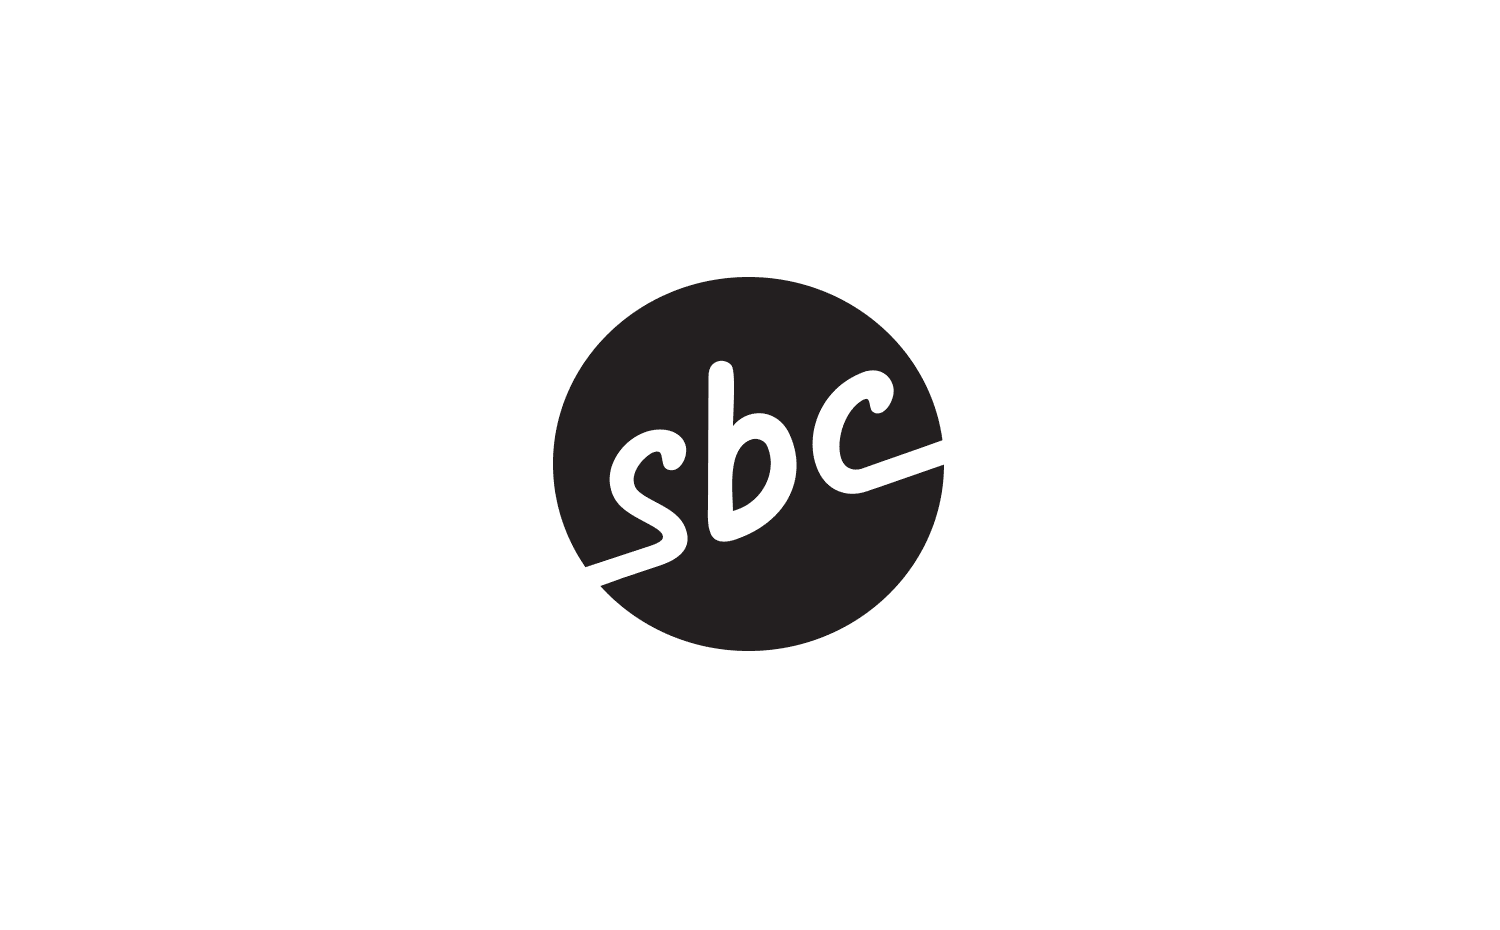 SBC Media